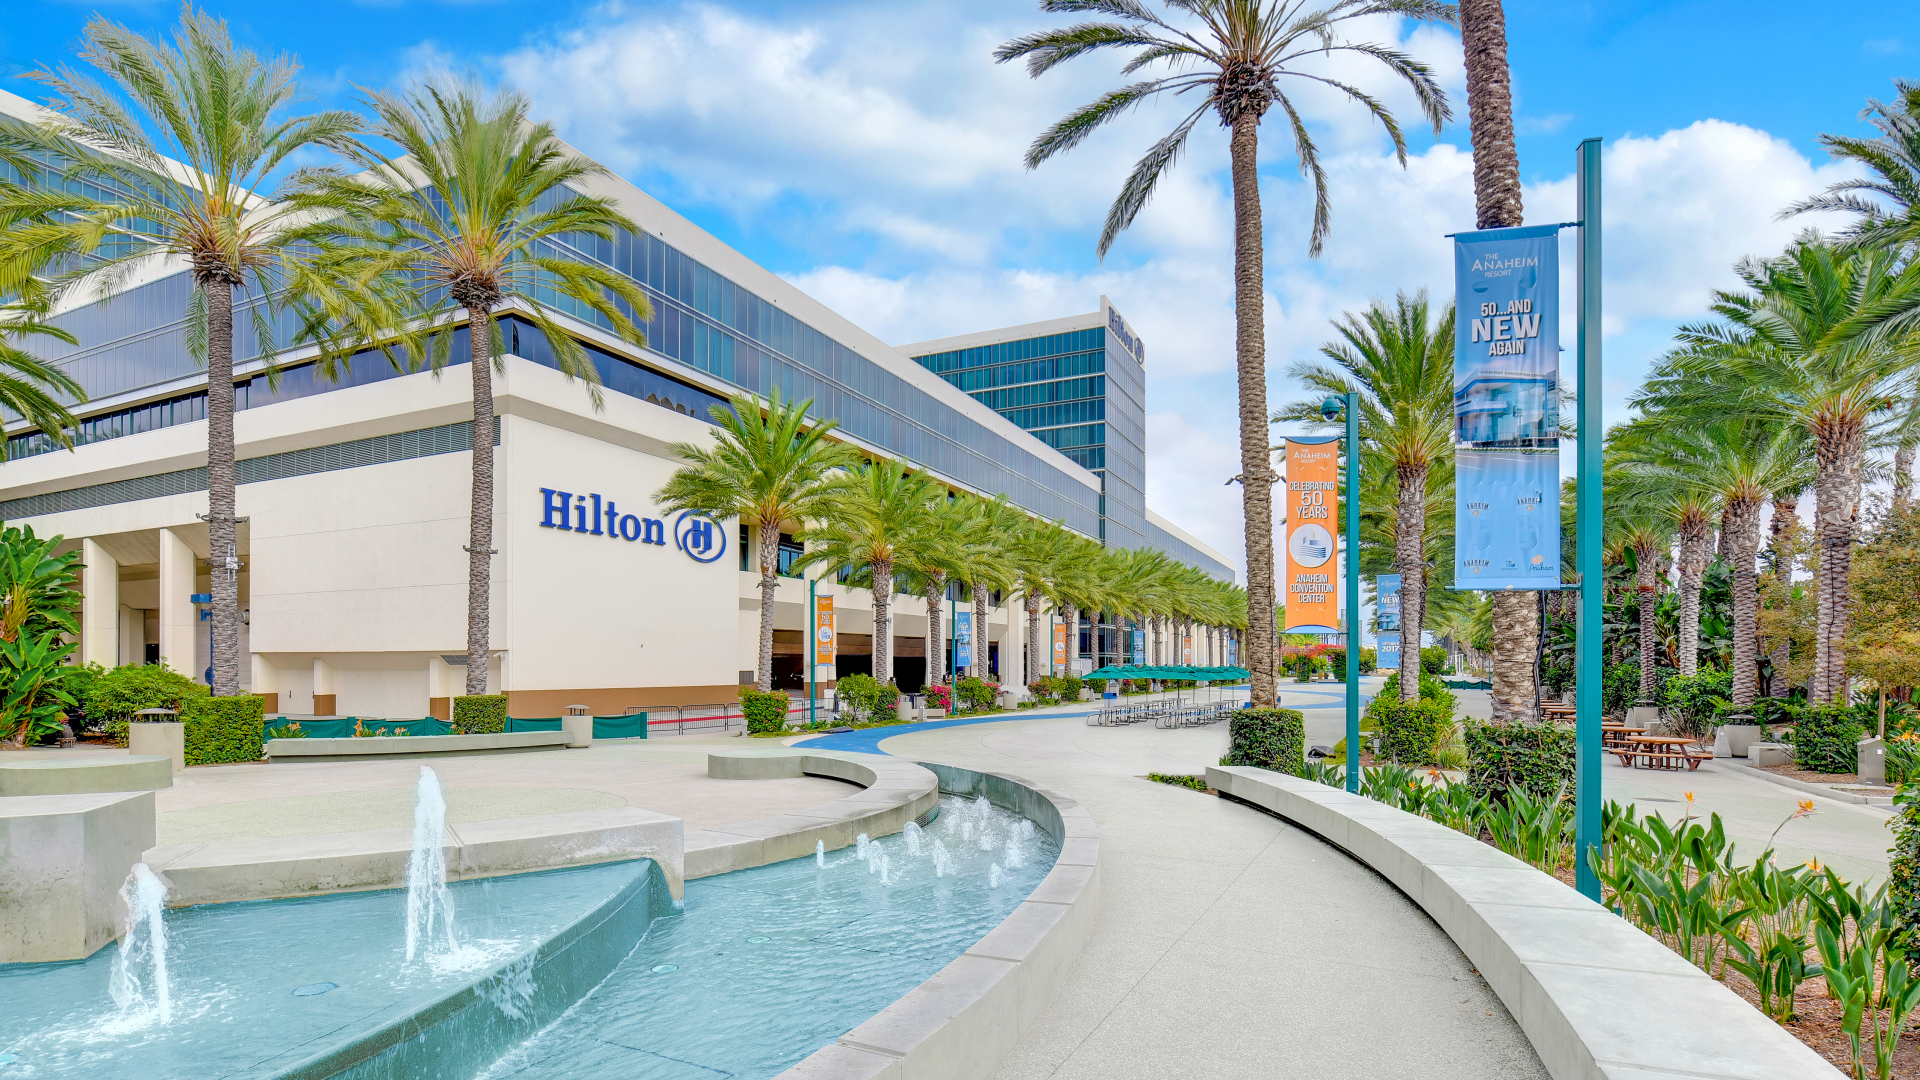 Photo of Hilton Anaheim, Anaheim, CA